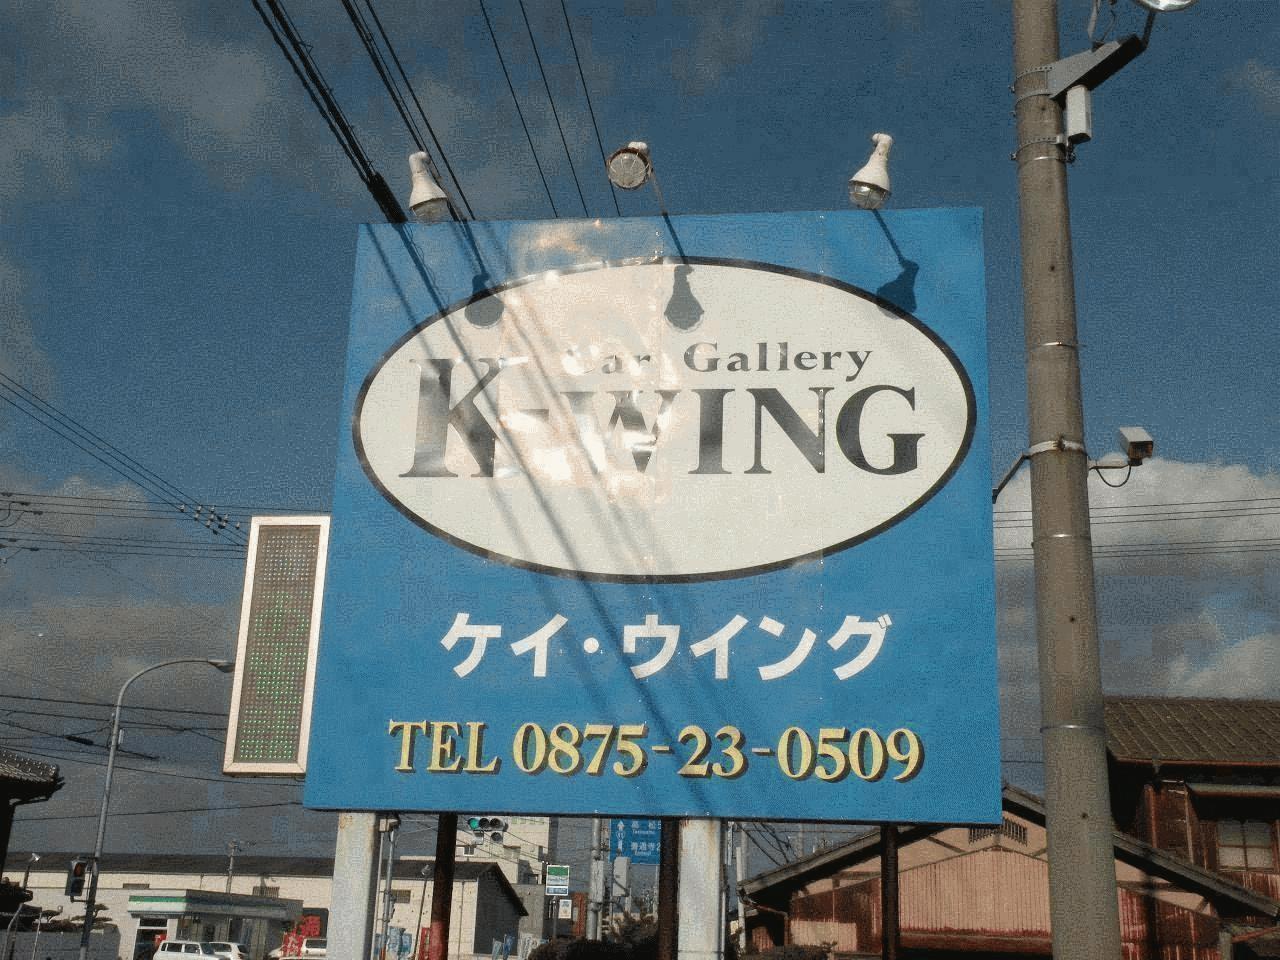 Car Gallery ケイ・ウイング